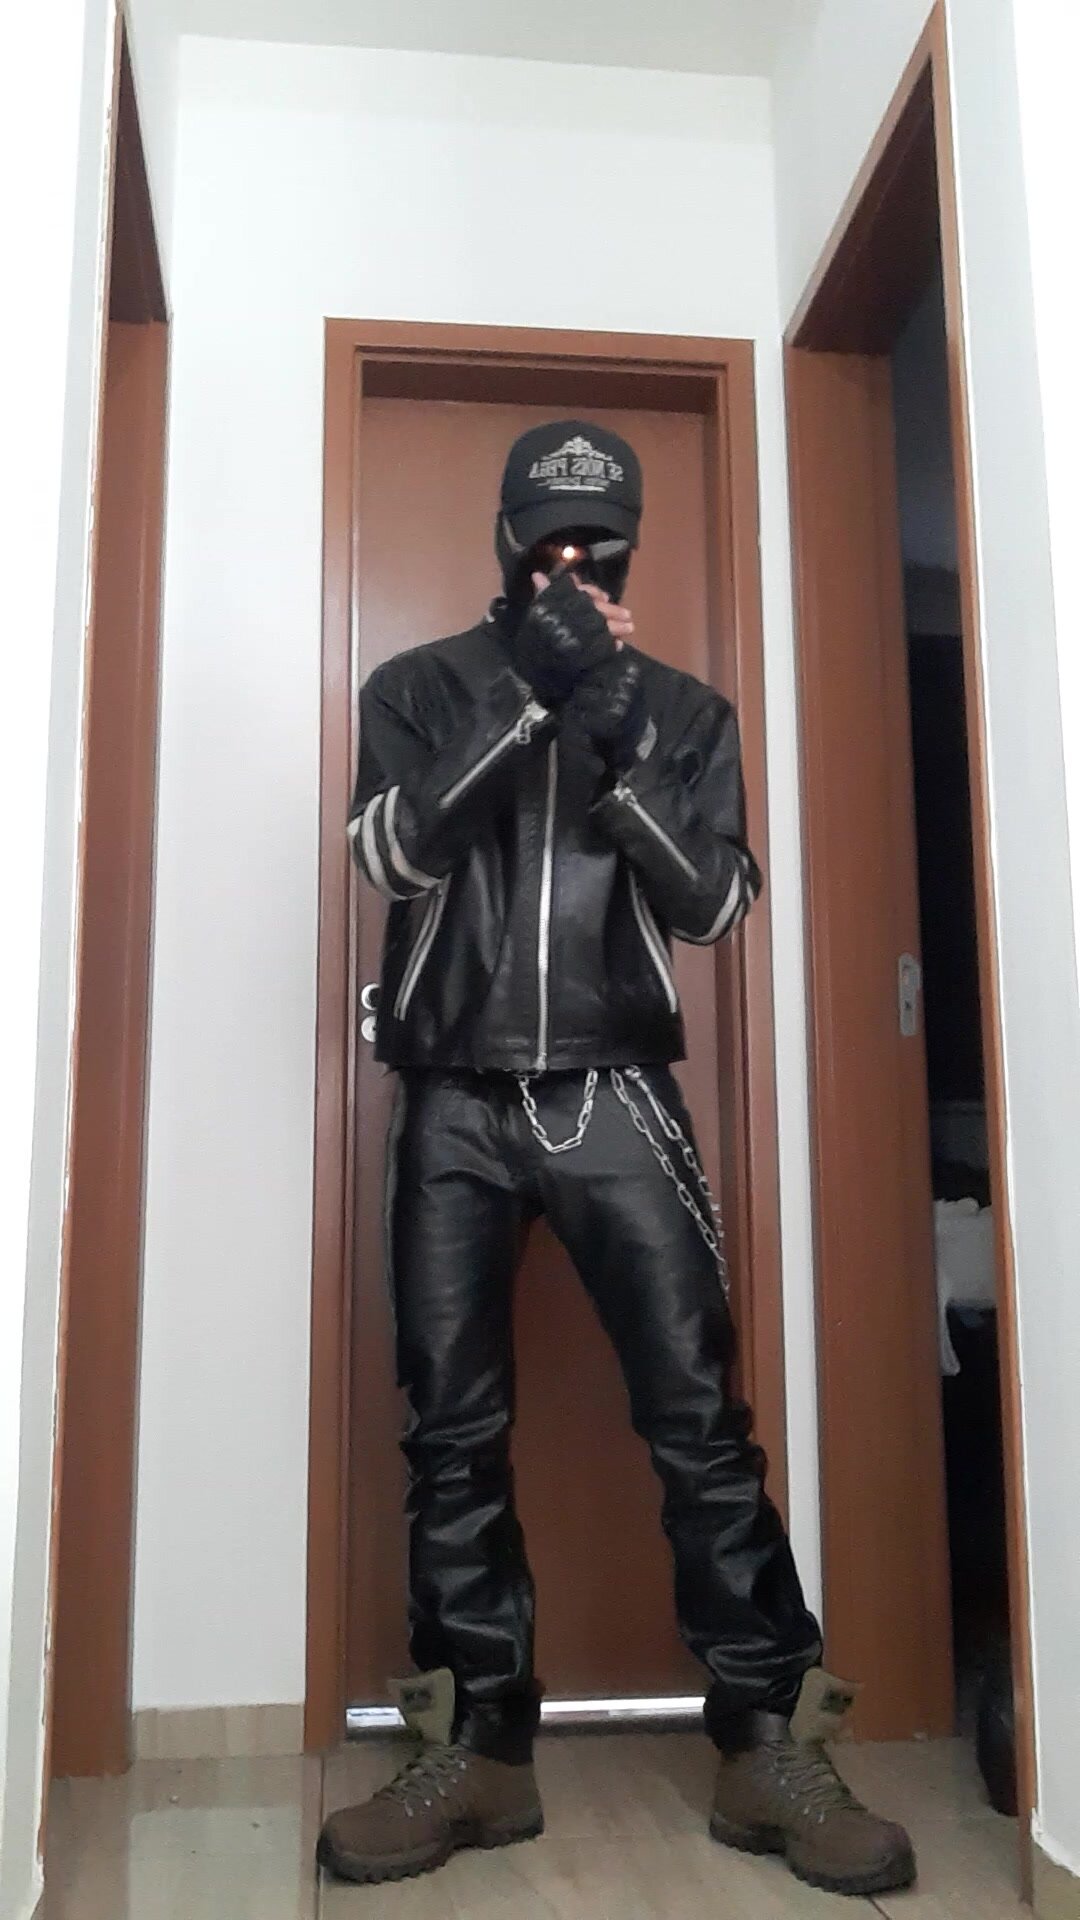 Leather boy  smoking with new jacket